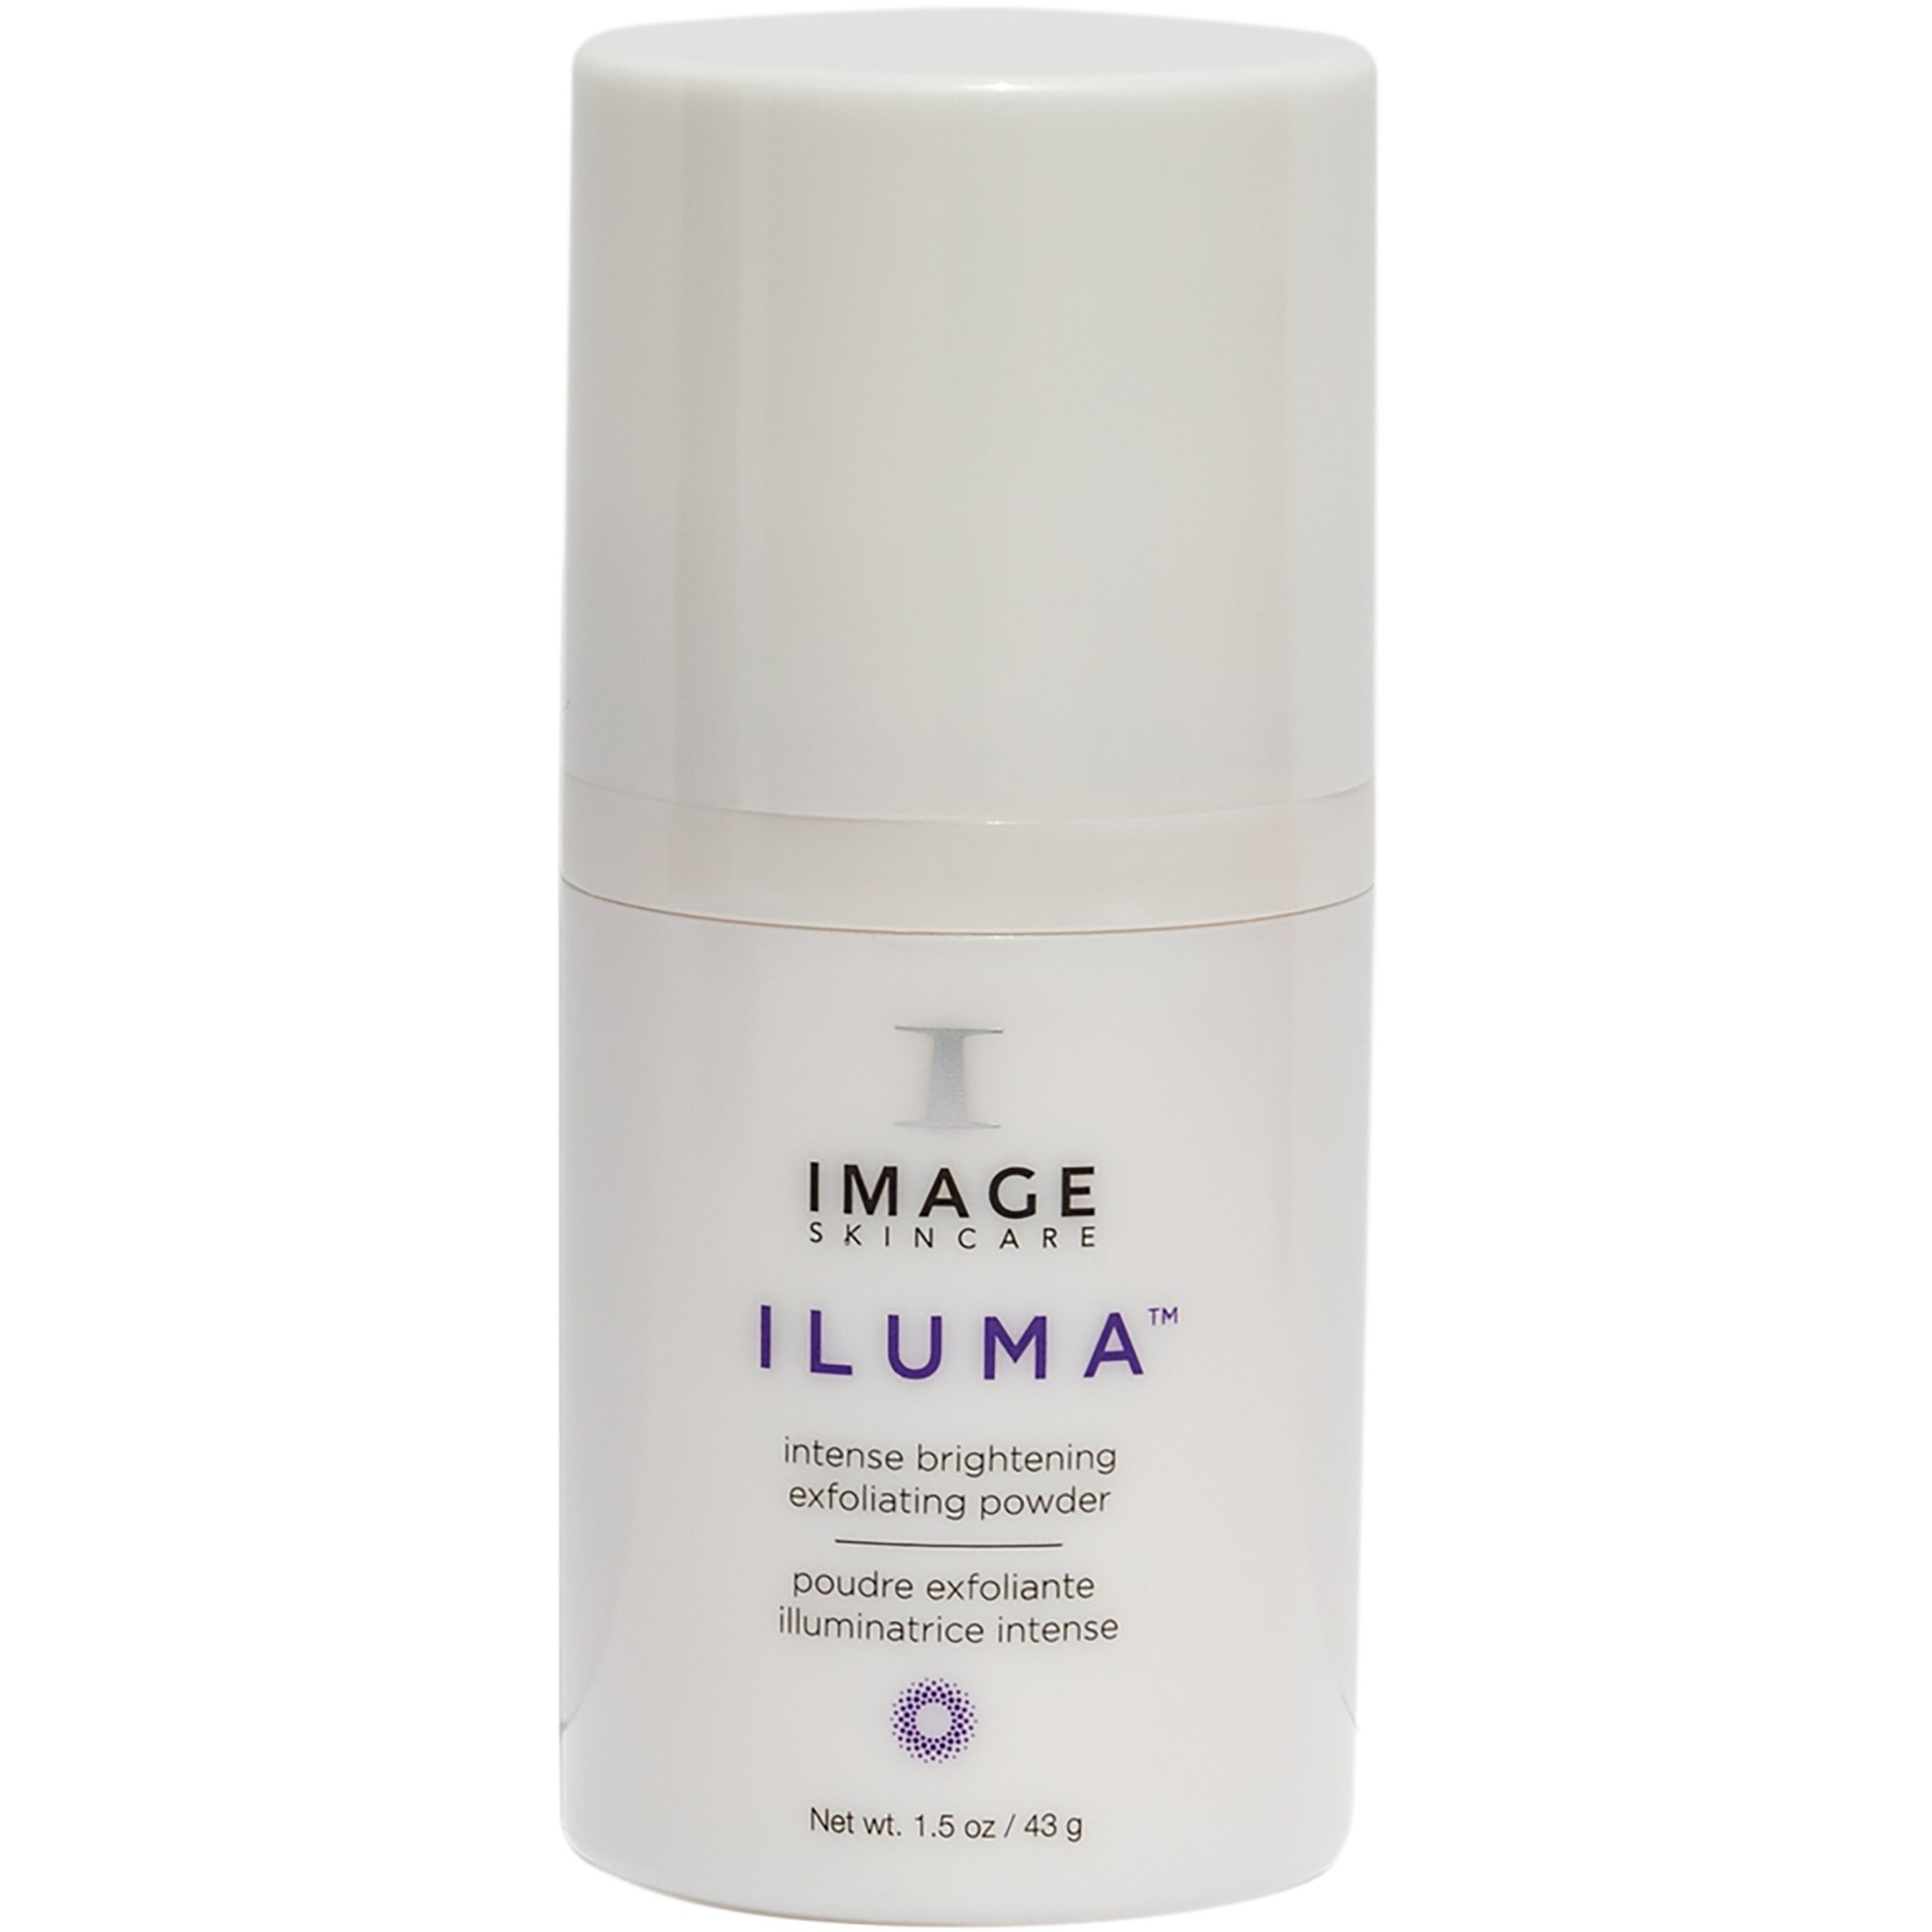 IMAGE Skincare Iluma® Intense Brightening Exfoliating Powder 43 g